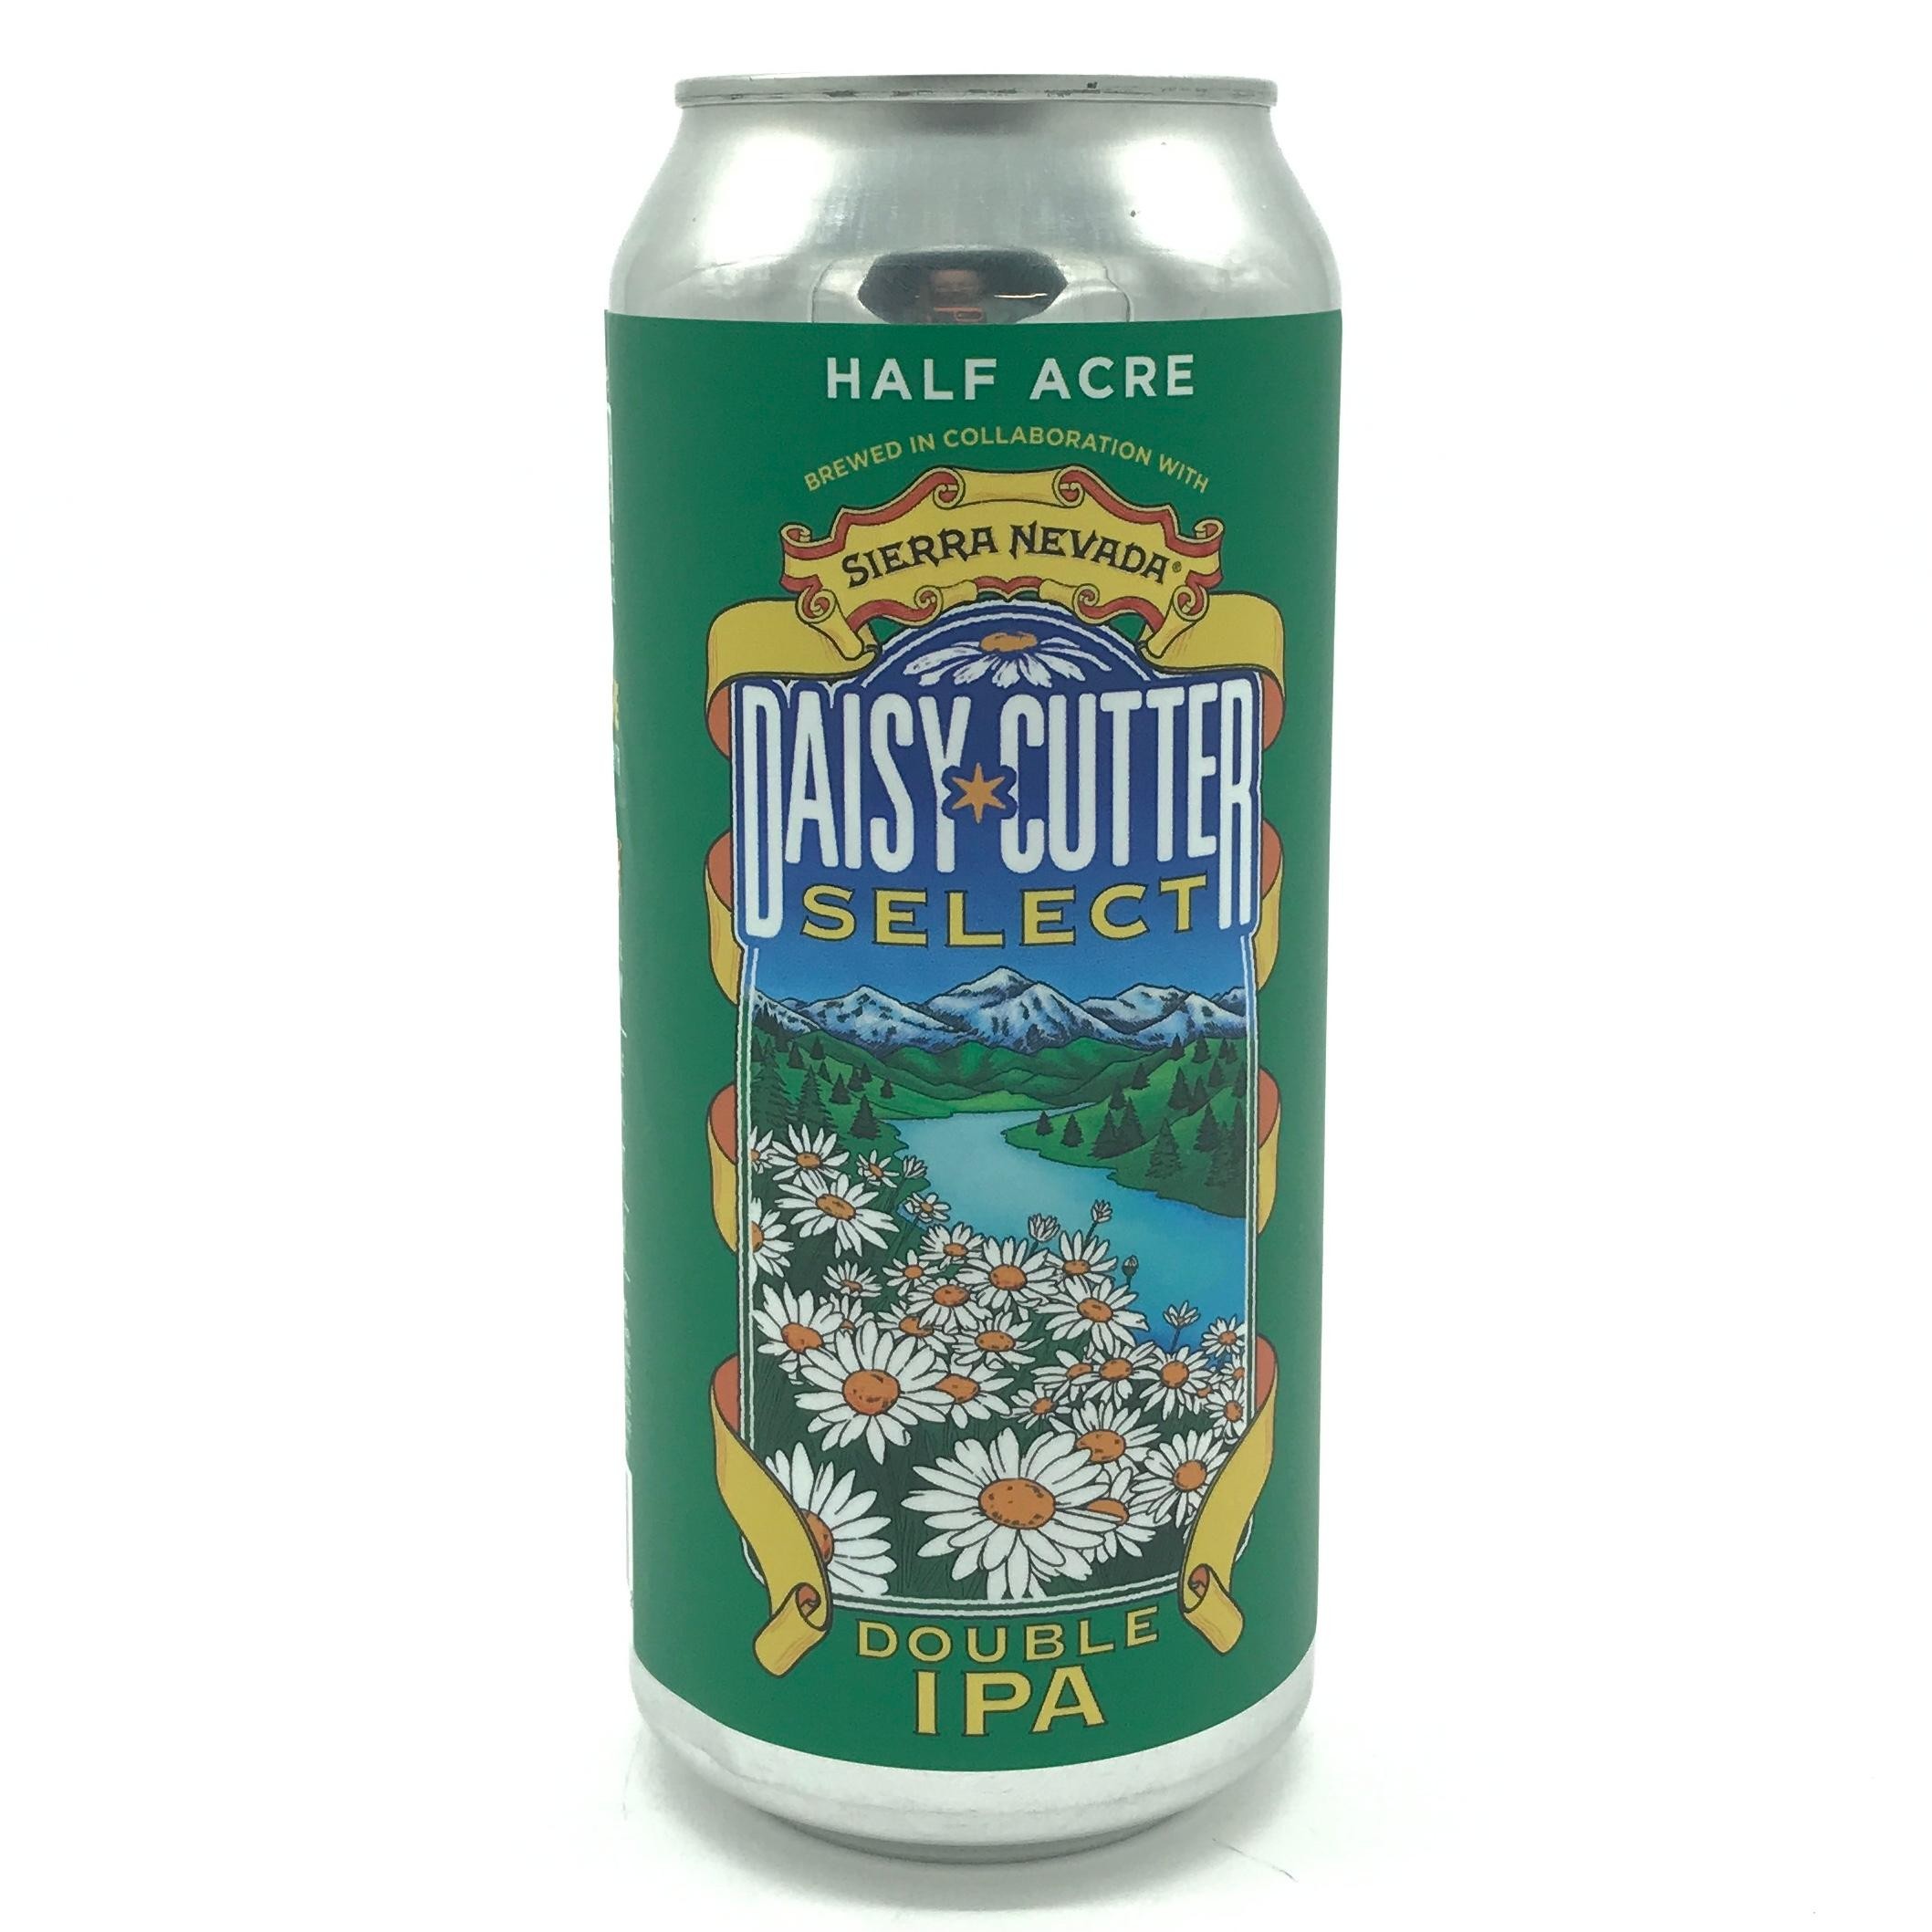 Half Acre x Sierra Nevada - Daisy Cutter Select